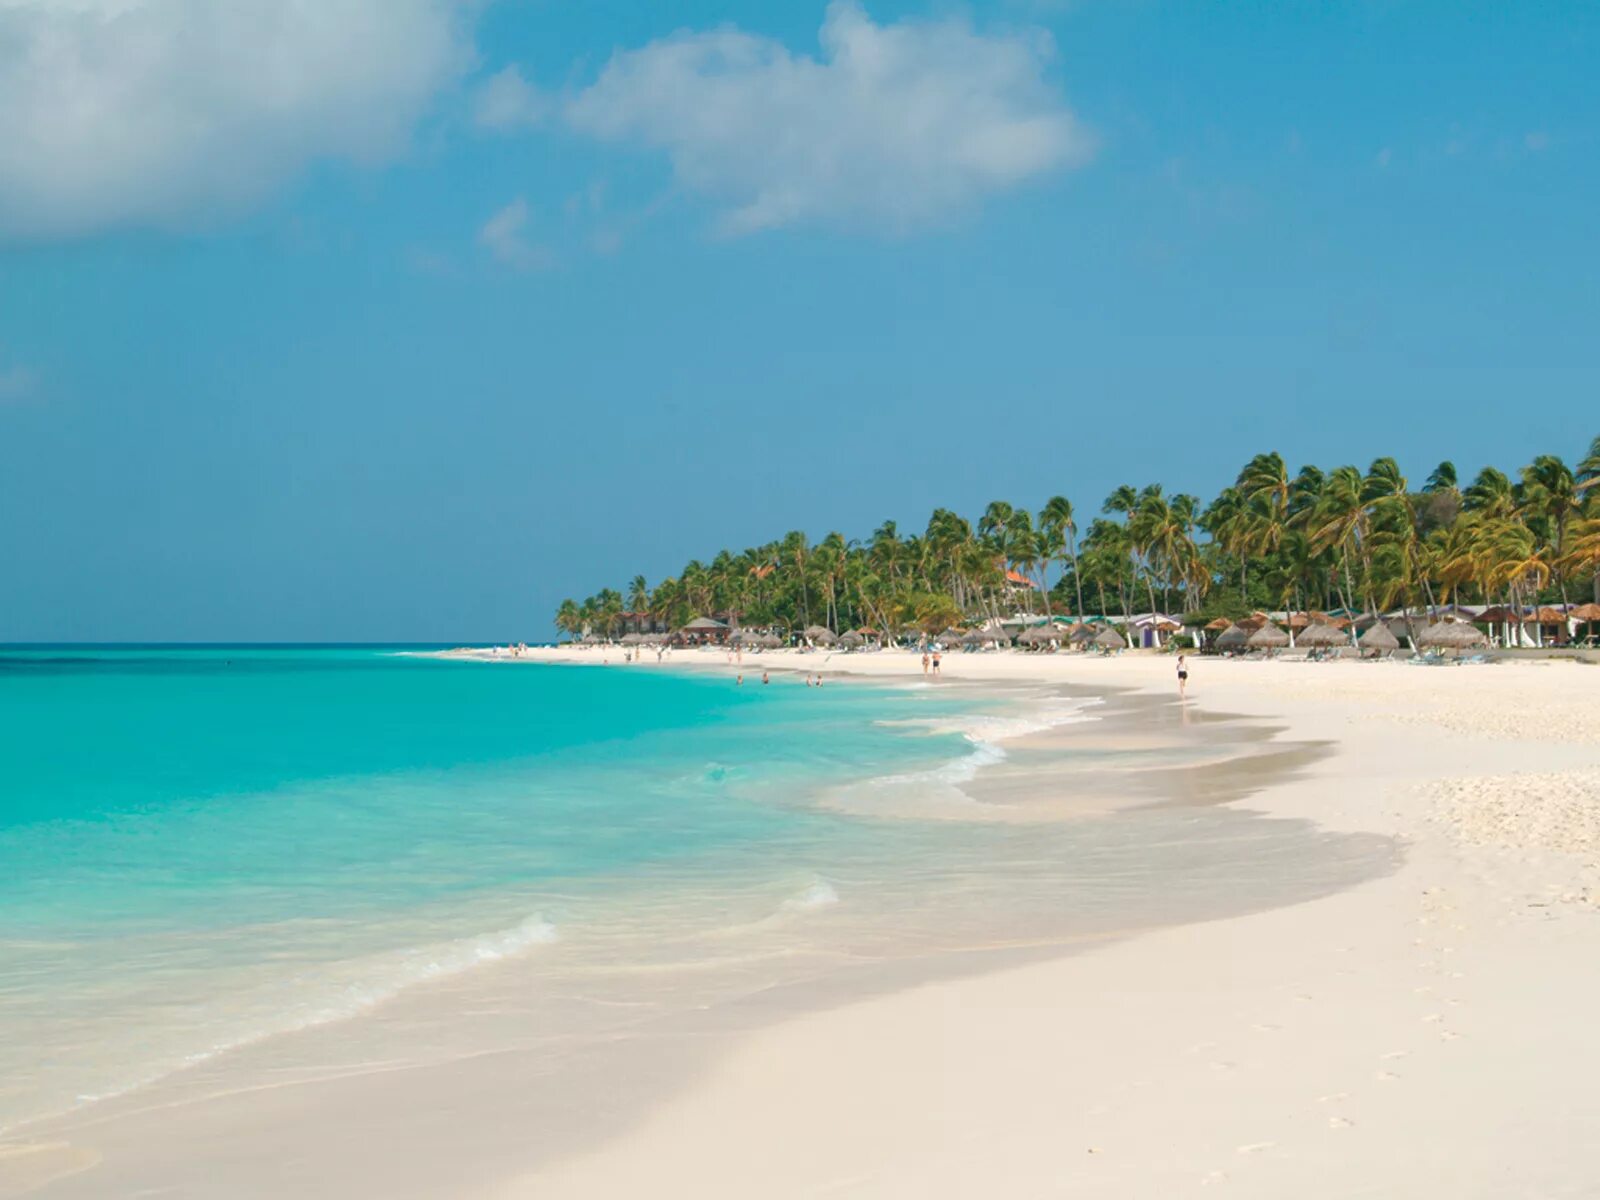 Доминиканская республика аруба. Аруба Карибские острова. Карибское море Доминикана. Аруба пляжи. Аруба Ораньестад.